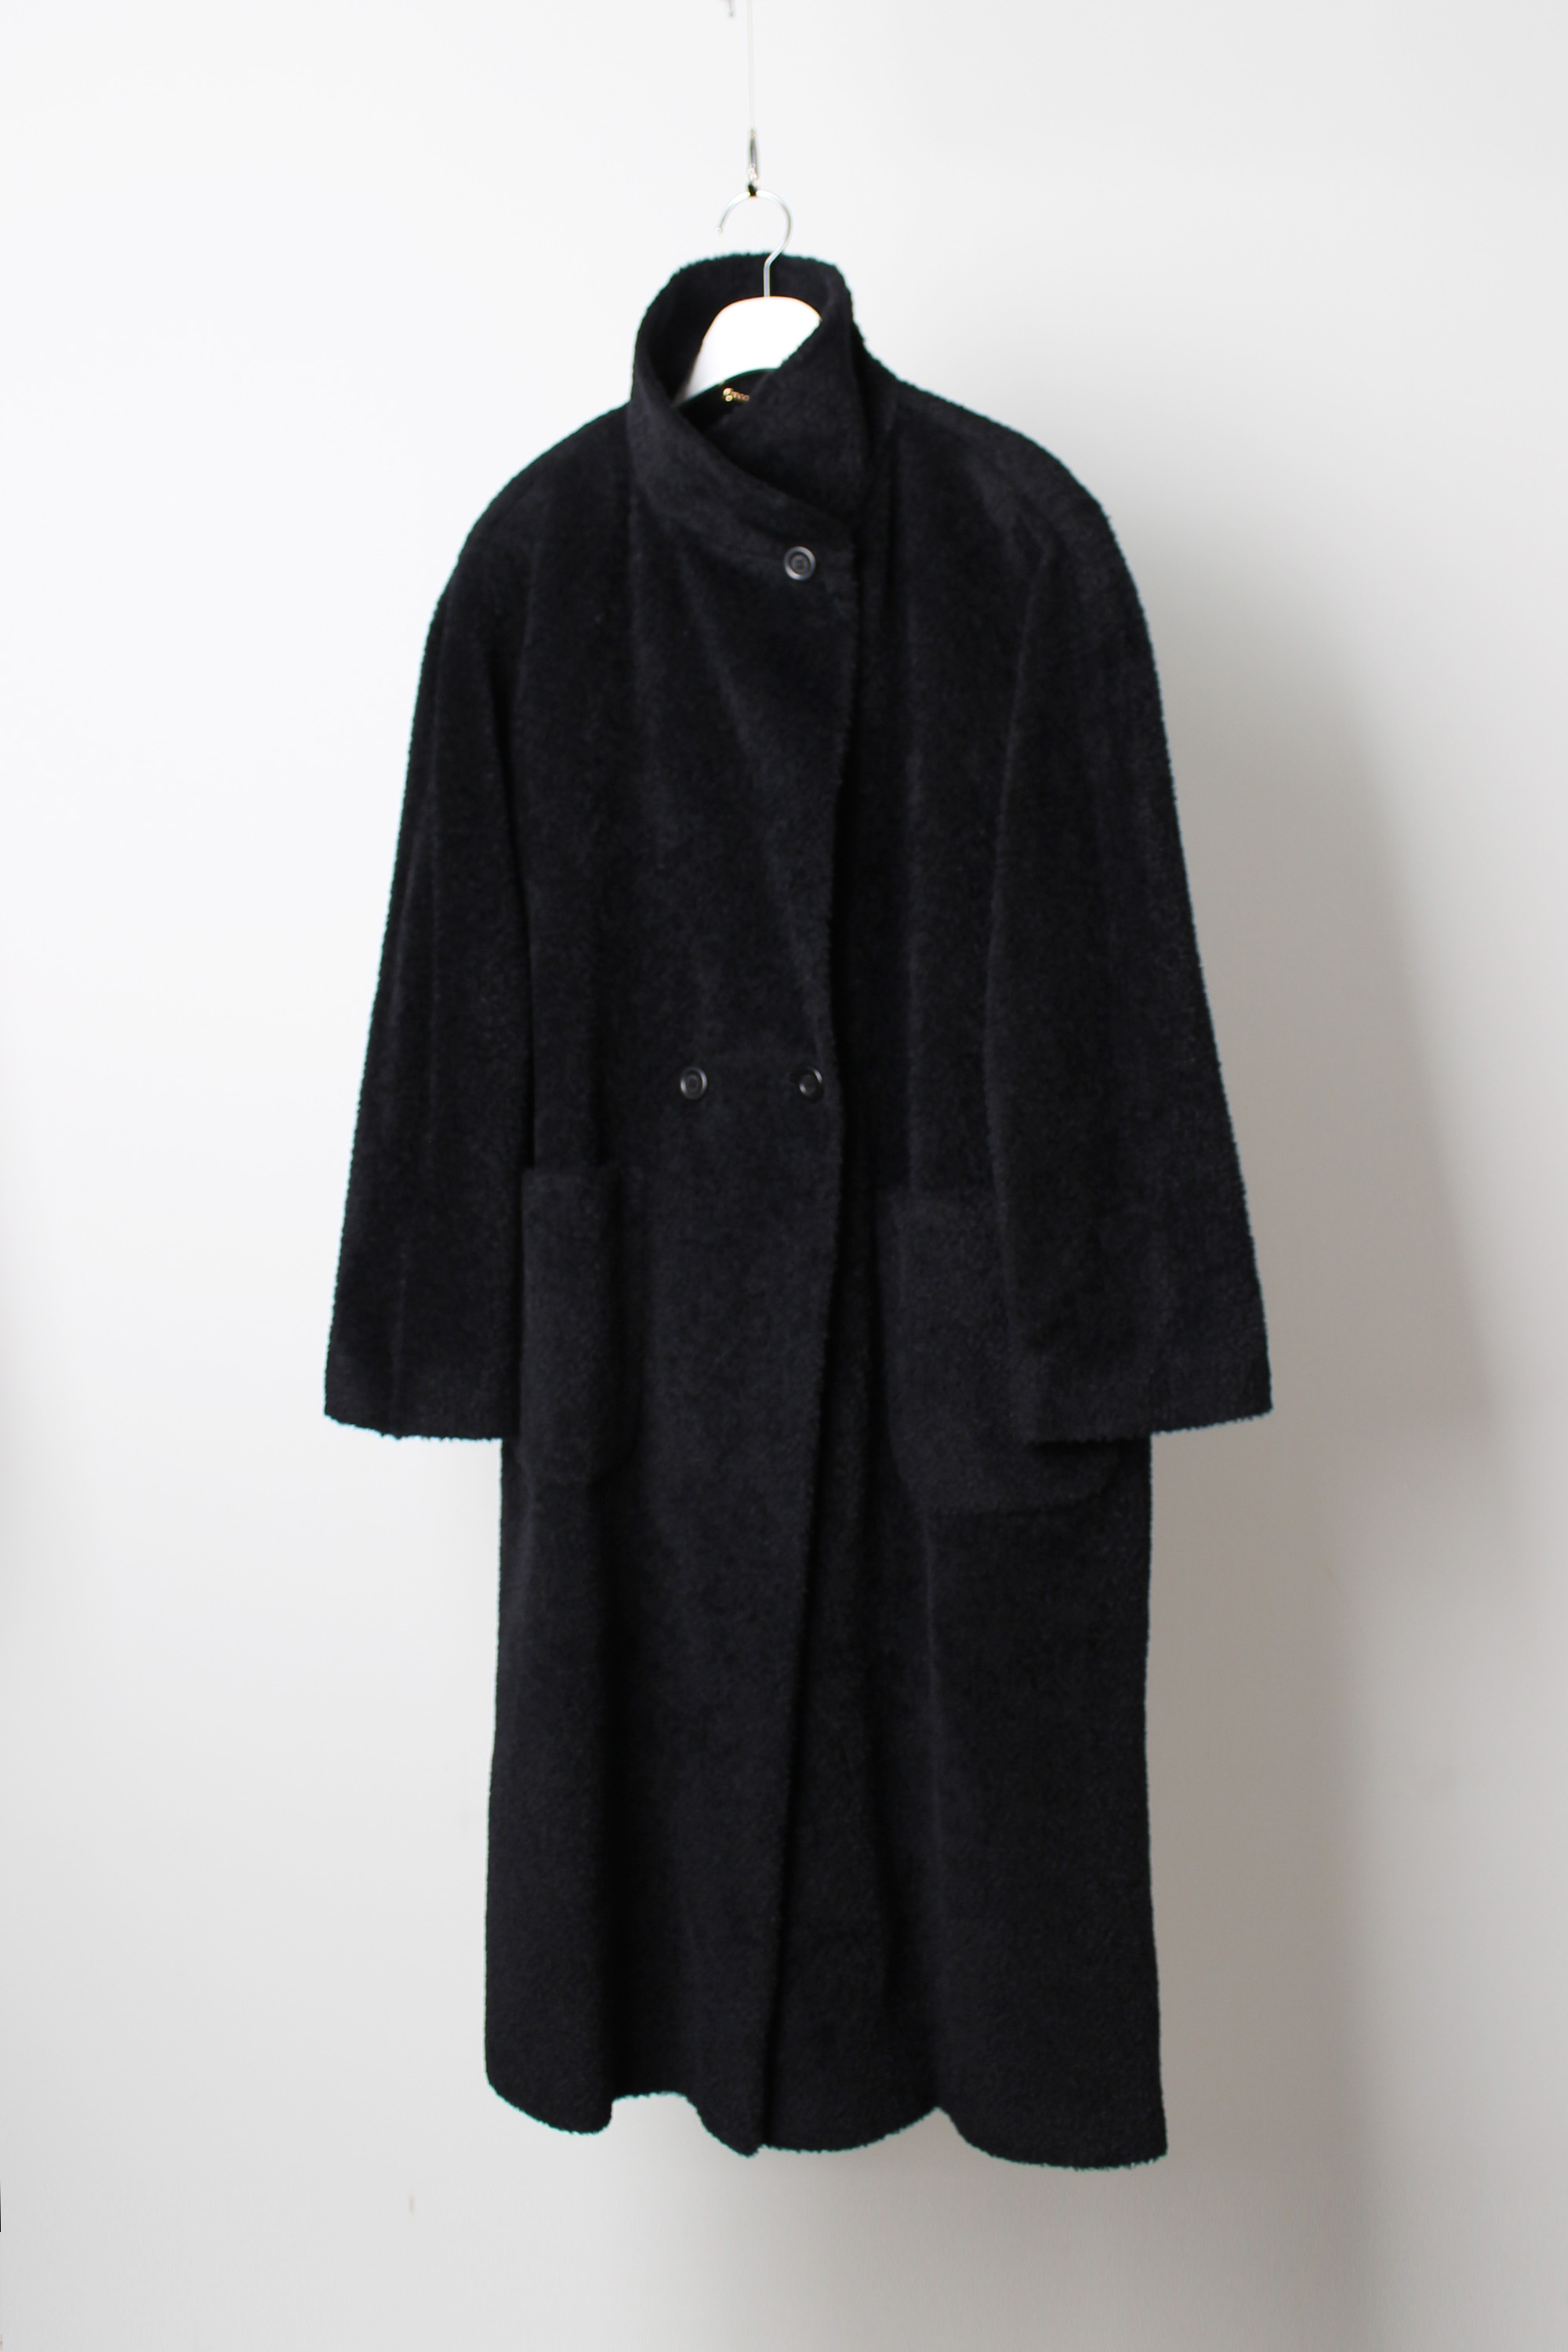 JAEGER Alpaca Coat (agnona fabric)